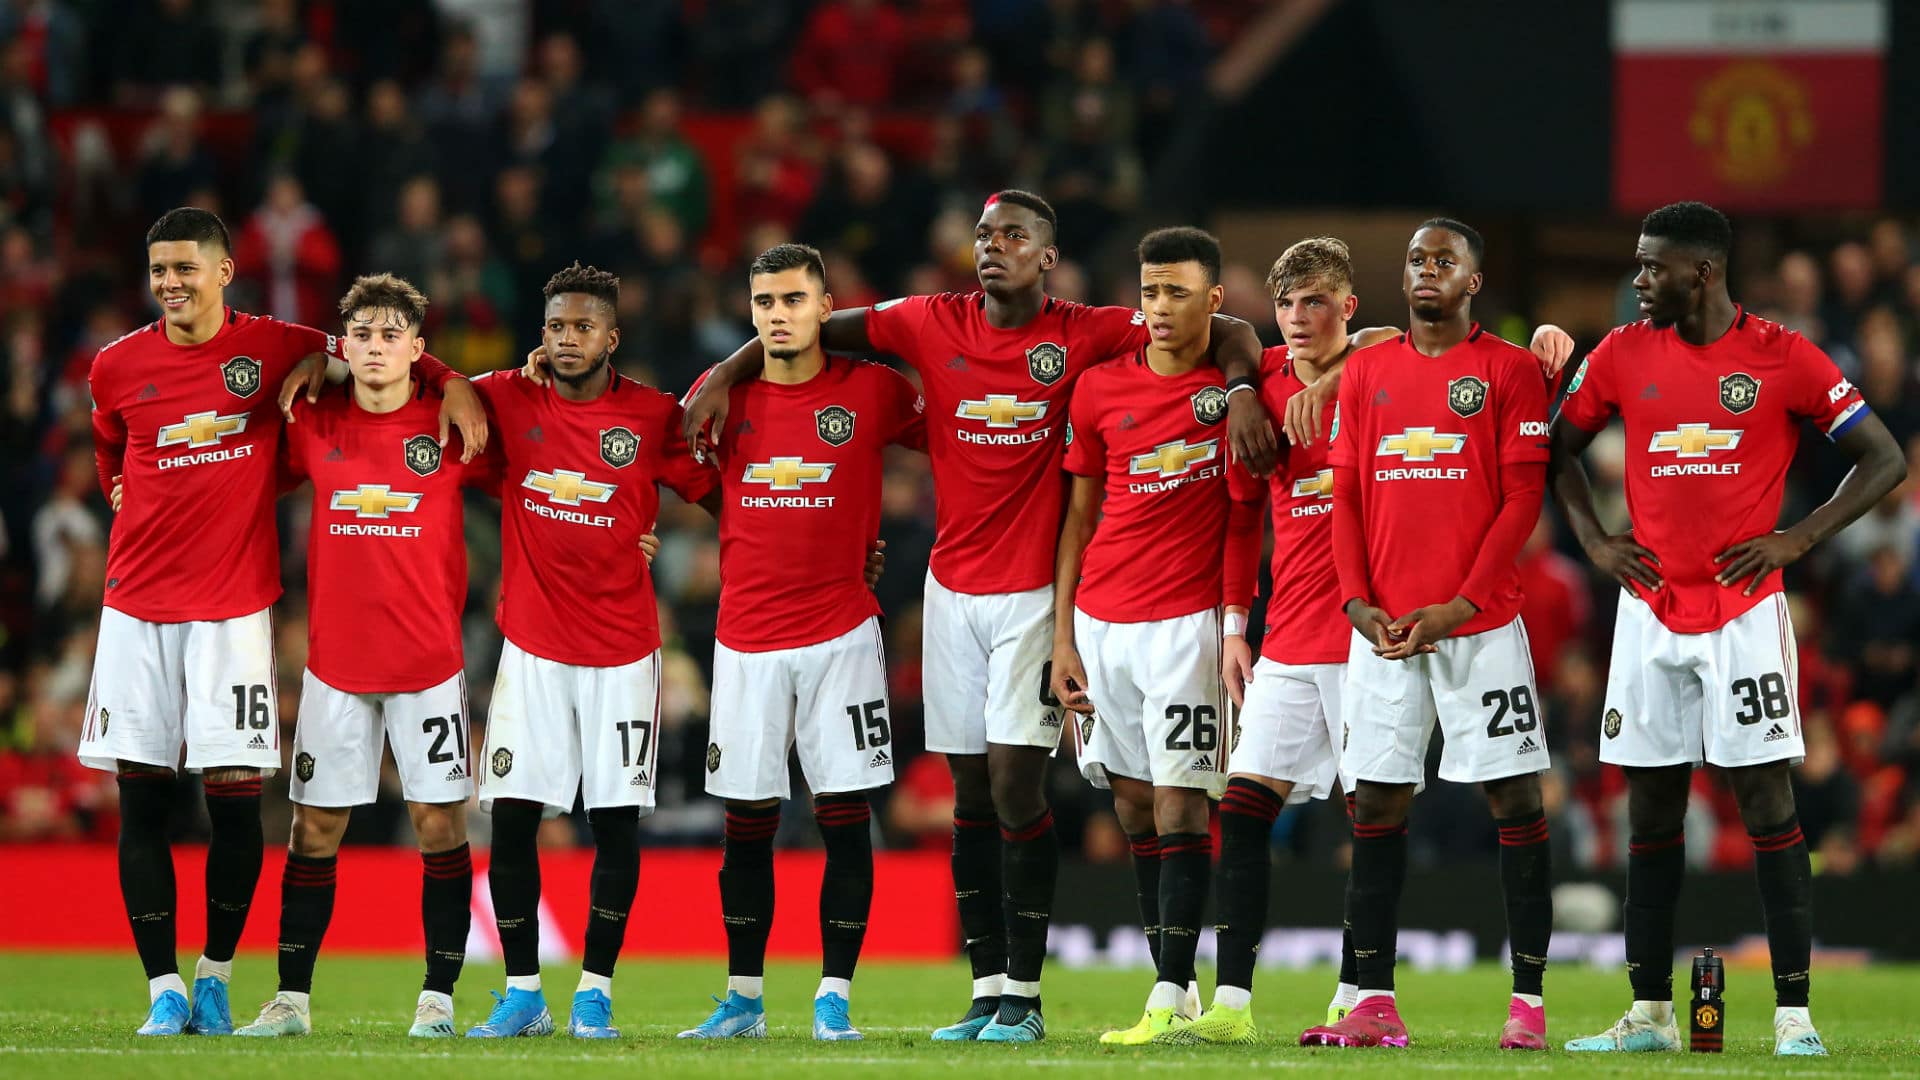 Manchester United confirme que neuf joueurs quitteront le club